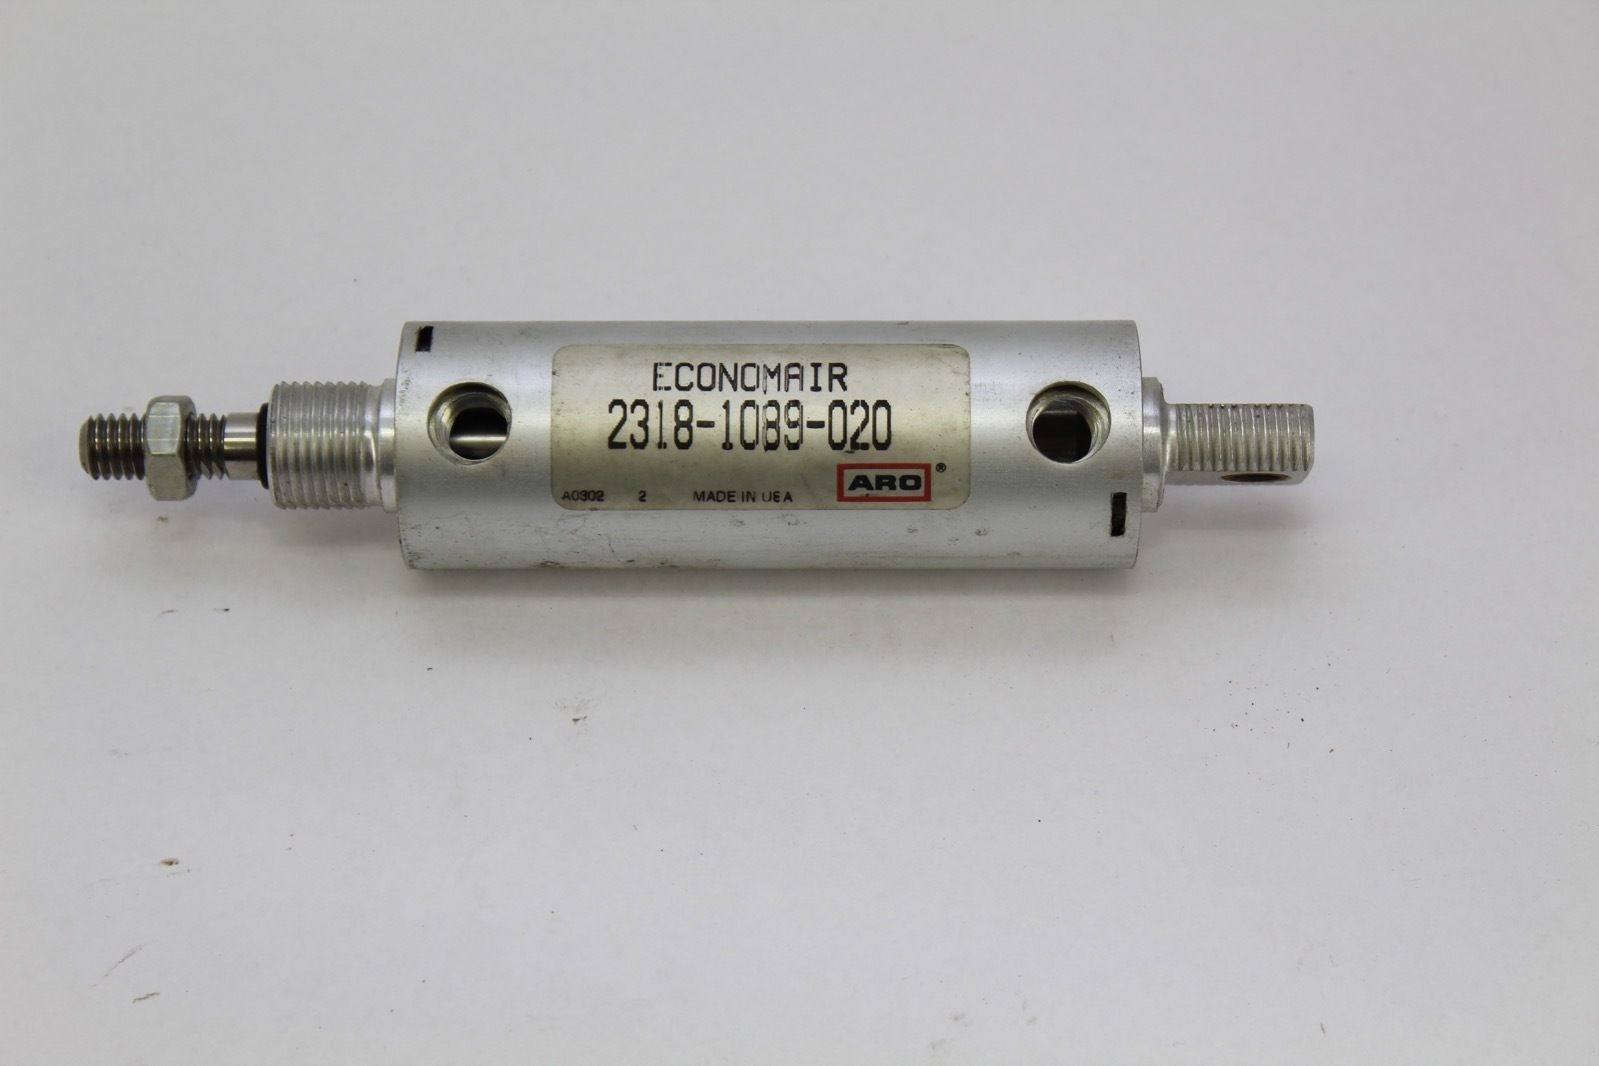 Aro Enconomair 2318-1089-020 Pneumatic Air Cylinder *NEW No box* (B274) 1